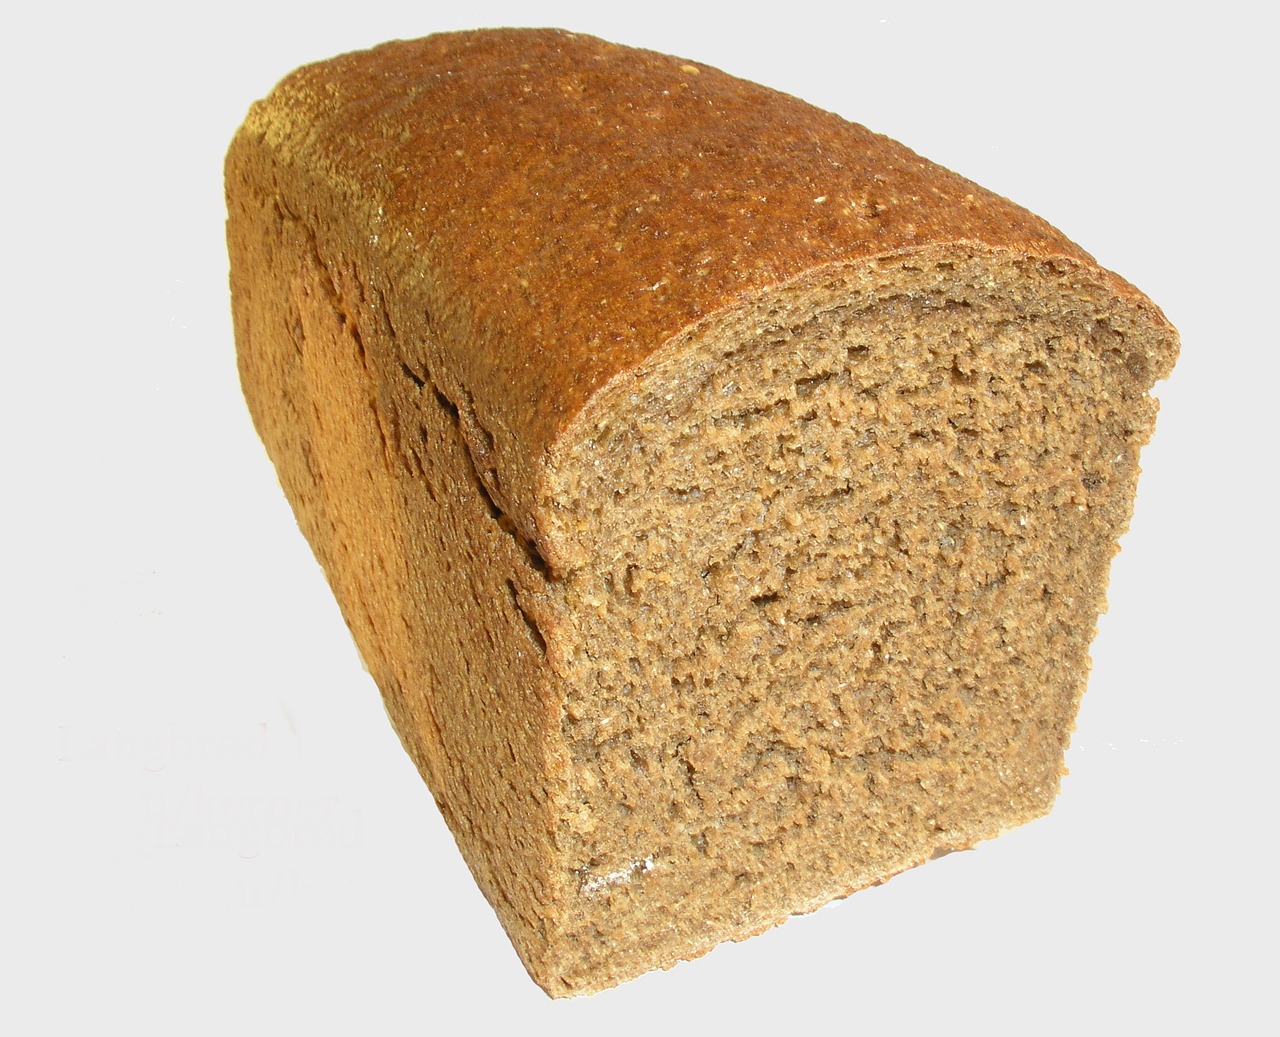 long bread no cores cores free photo